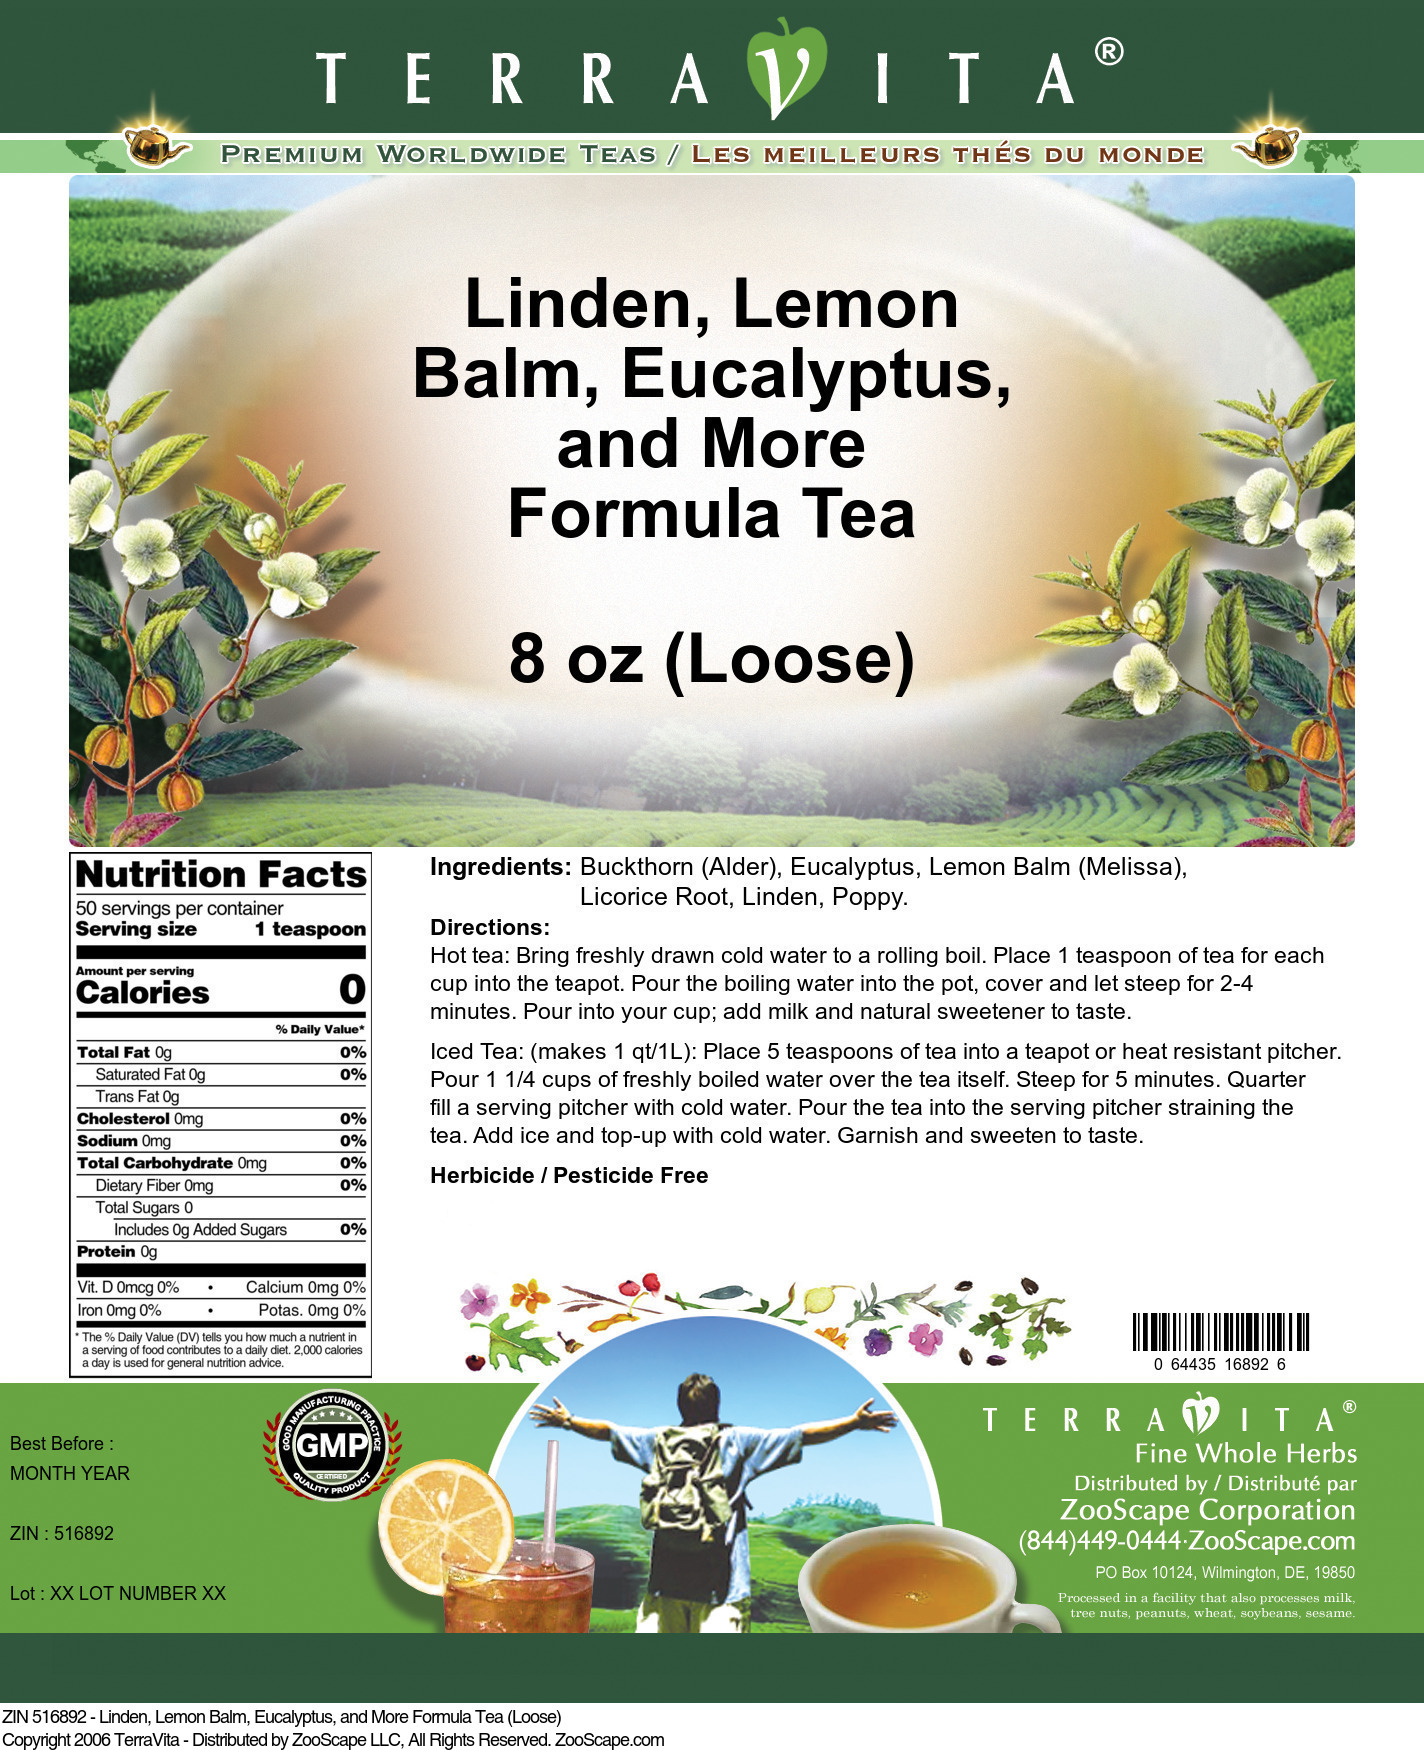 Linden, Lemon Balm, Eucalyptus, and More Formula Tea (Loose) - Label